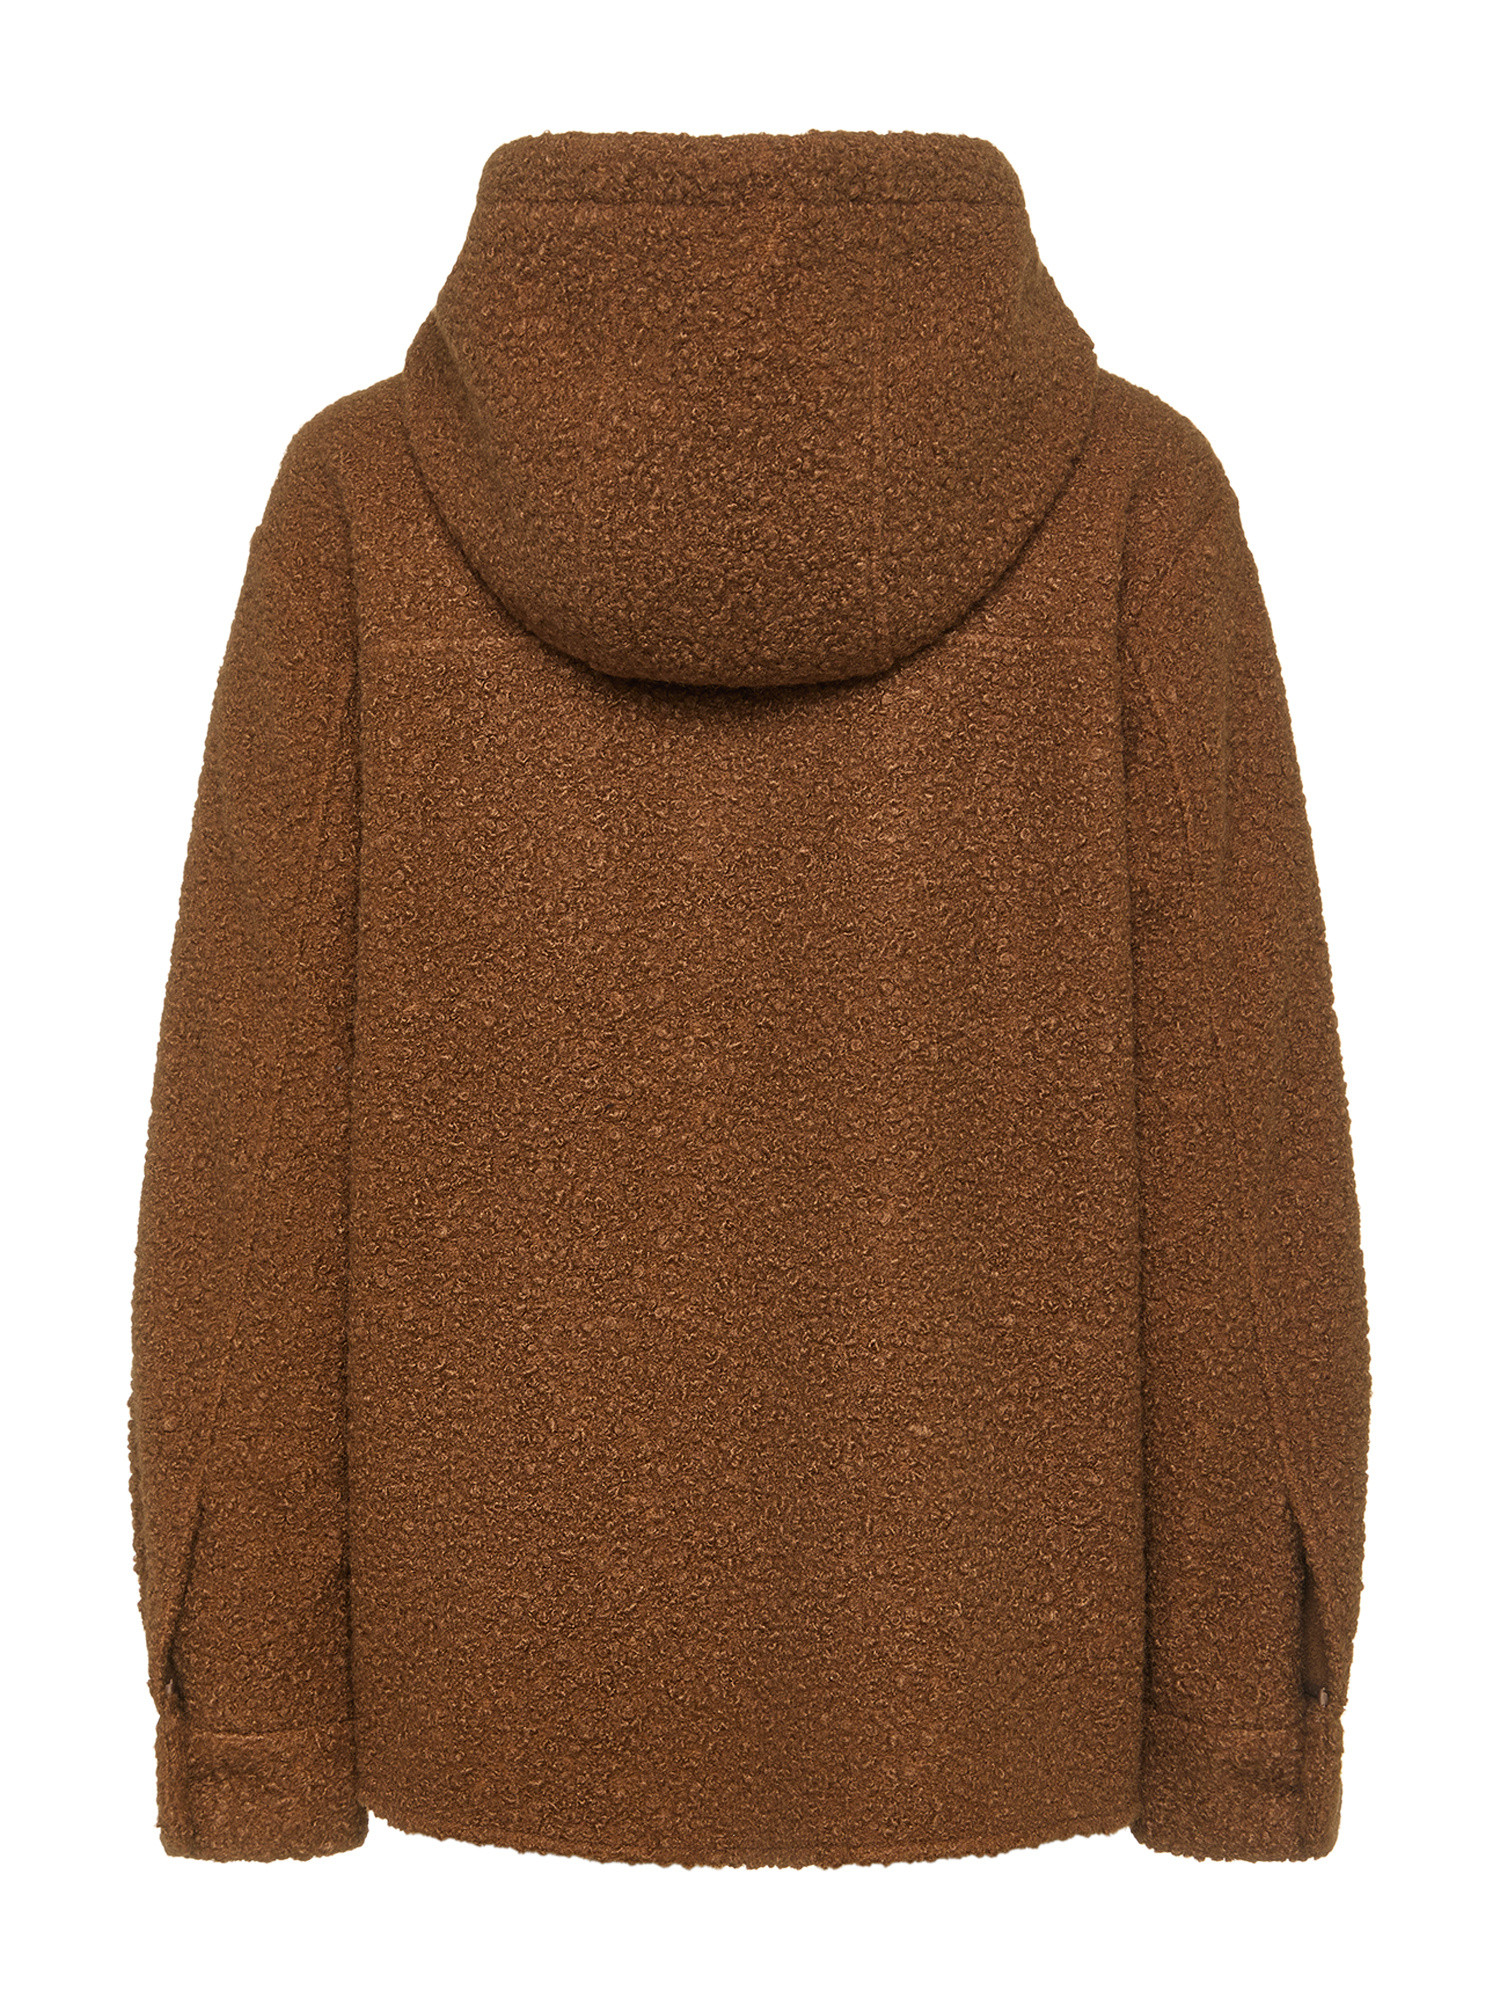 Koan - Short jacket with hood, Camel, large image number 1